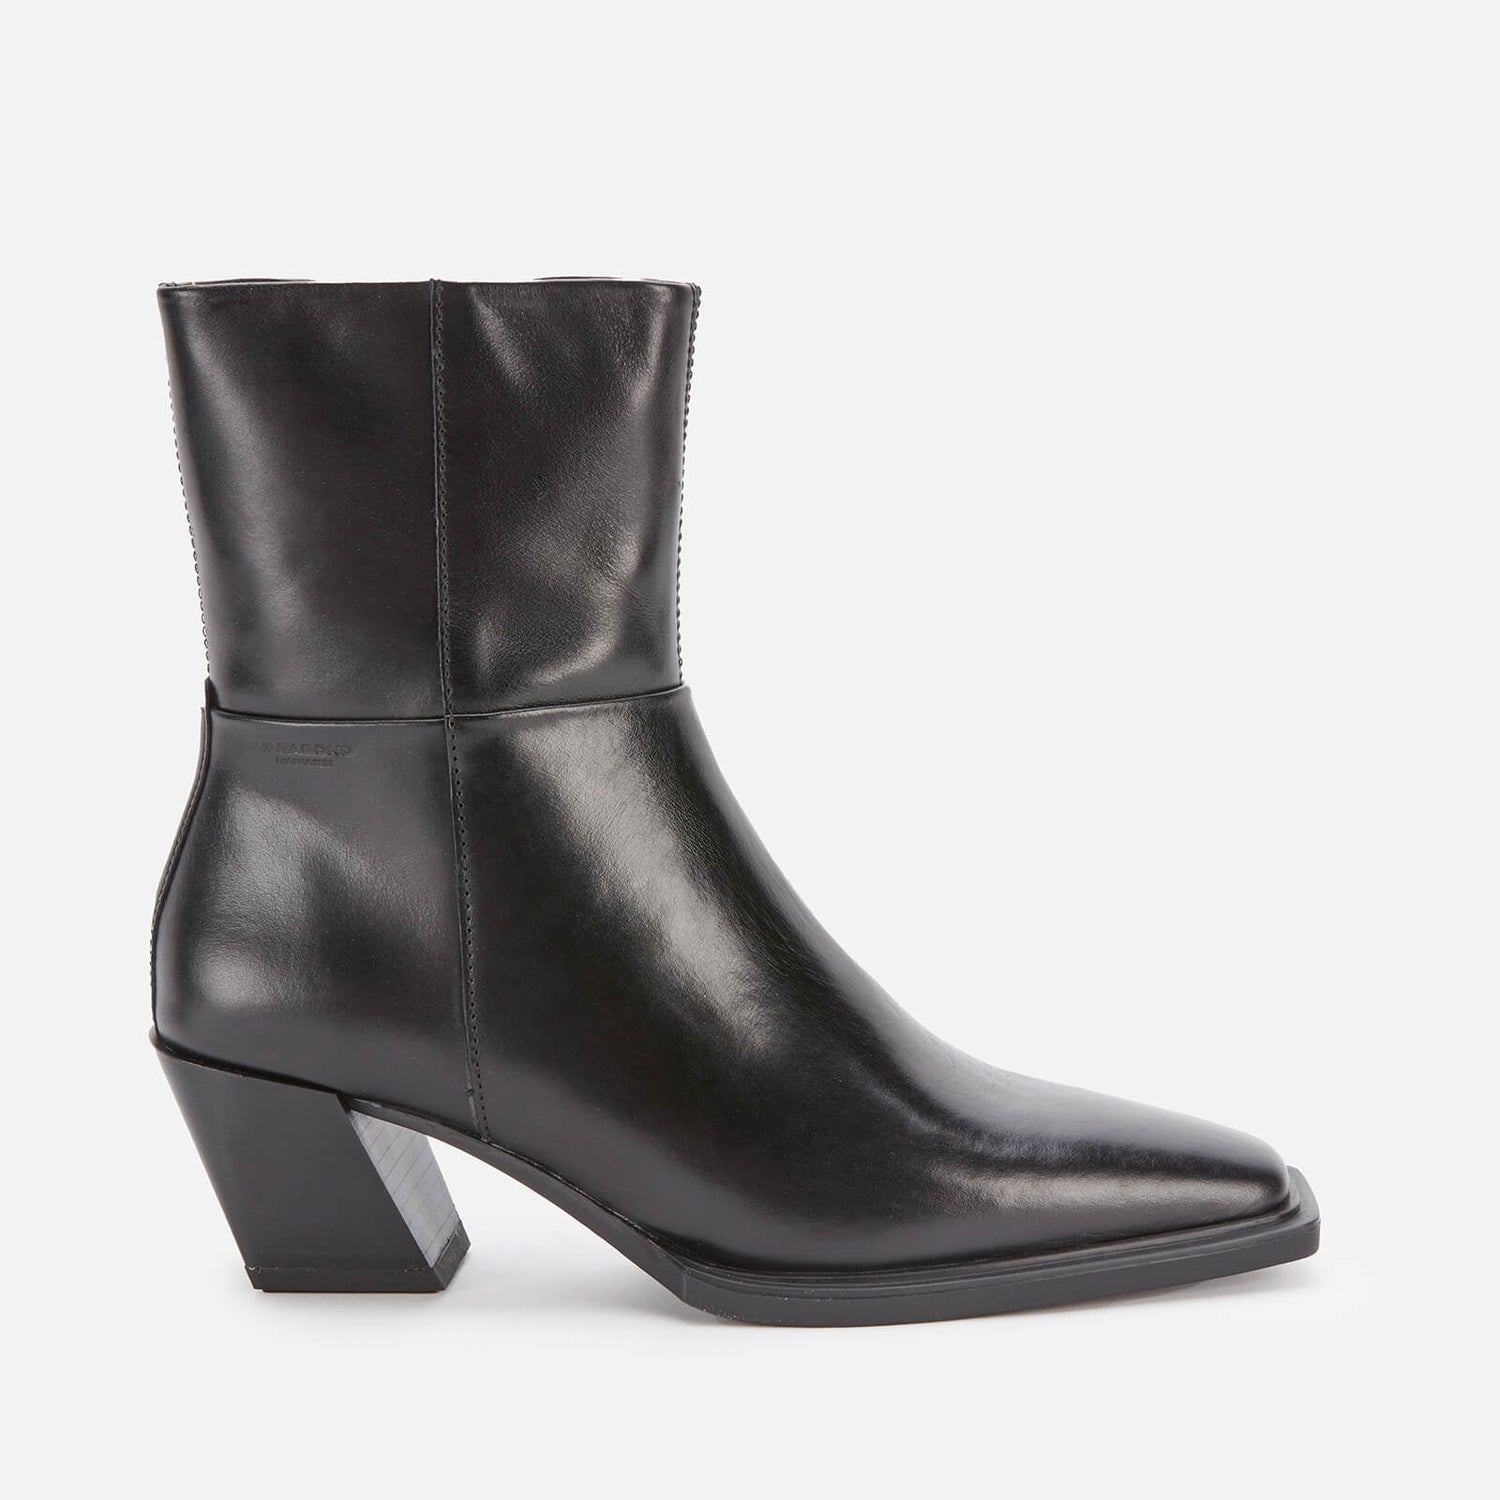 Vagabond Women's Alina Leather Heeled Boots - Black